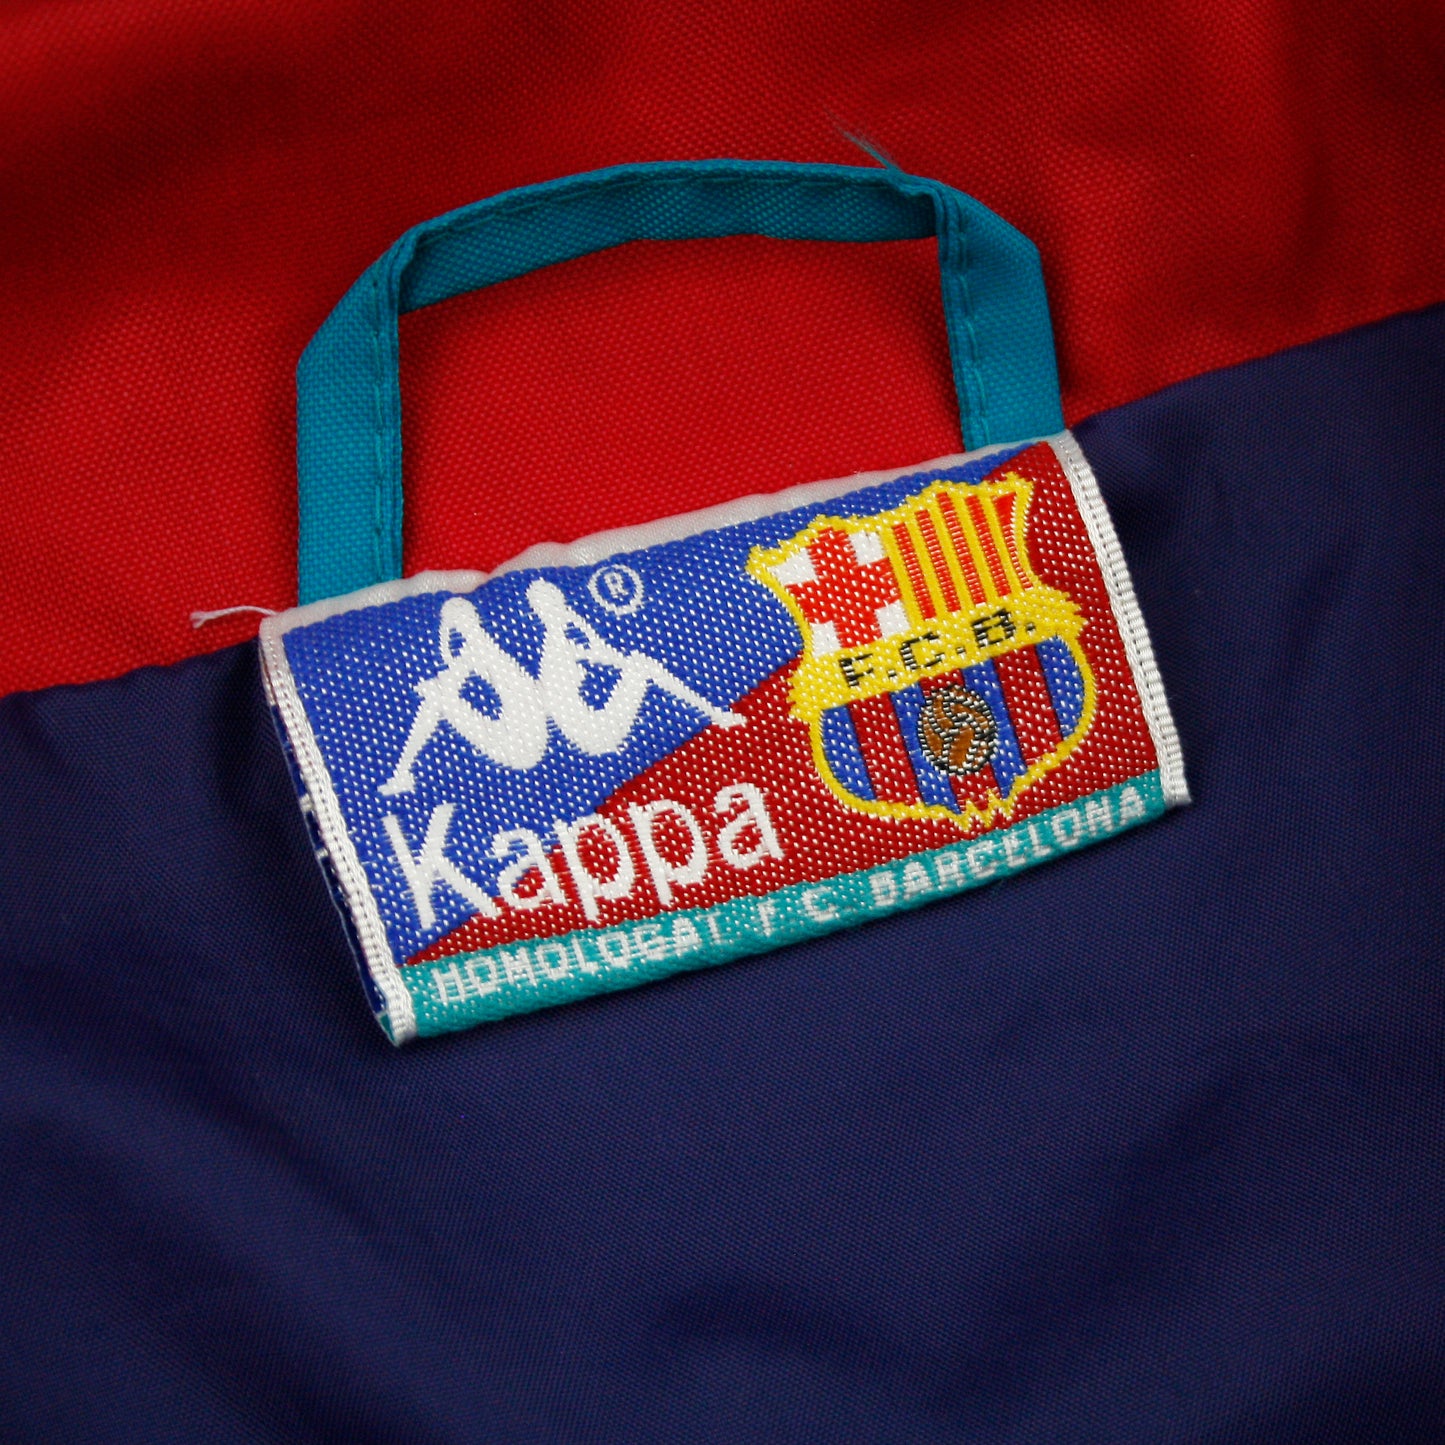 Barcelona 92/95 • Bench Jacket • XL